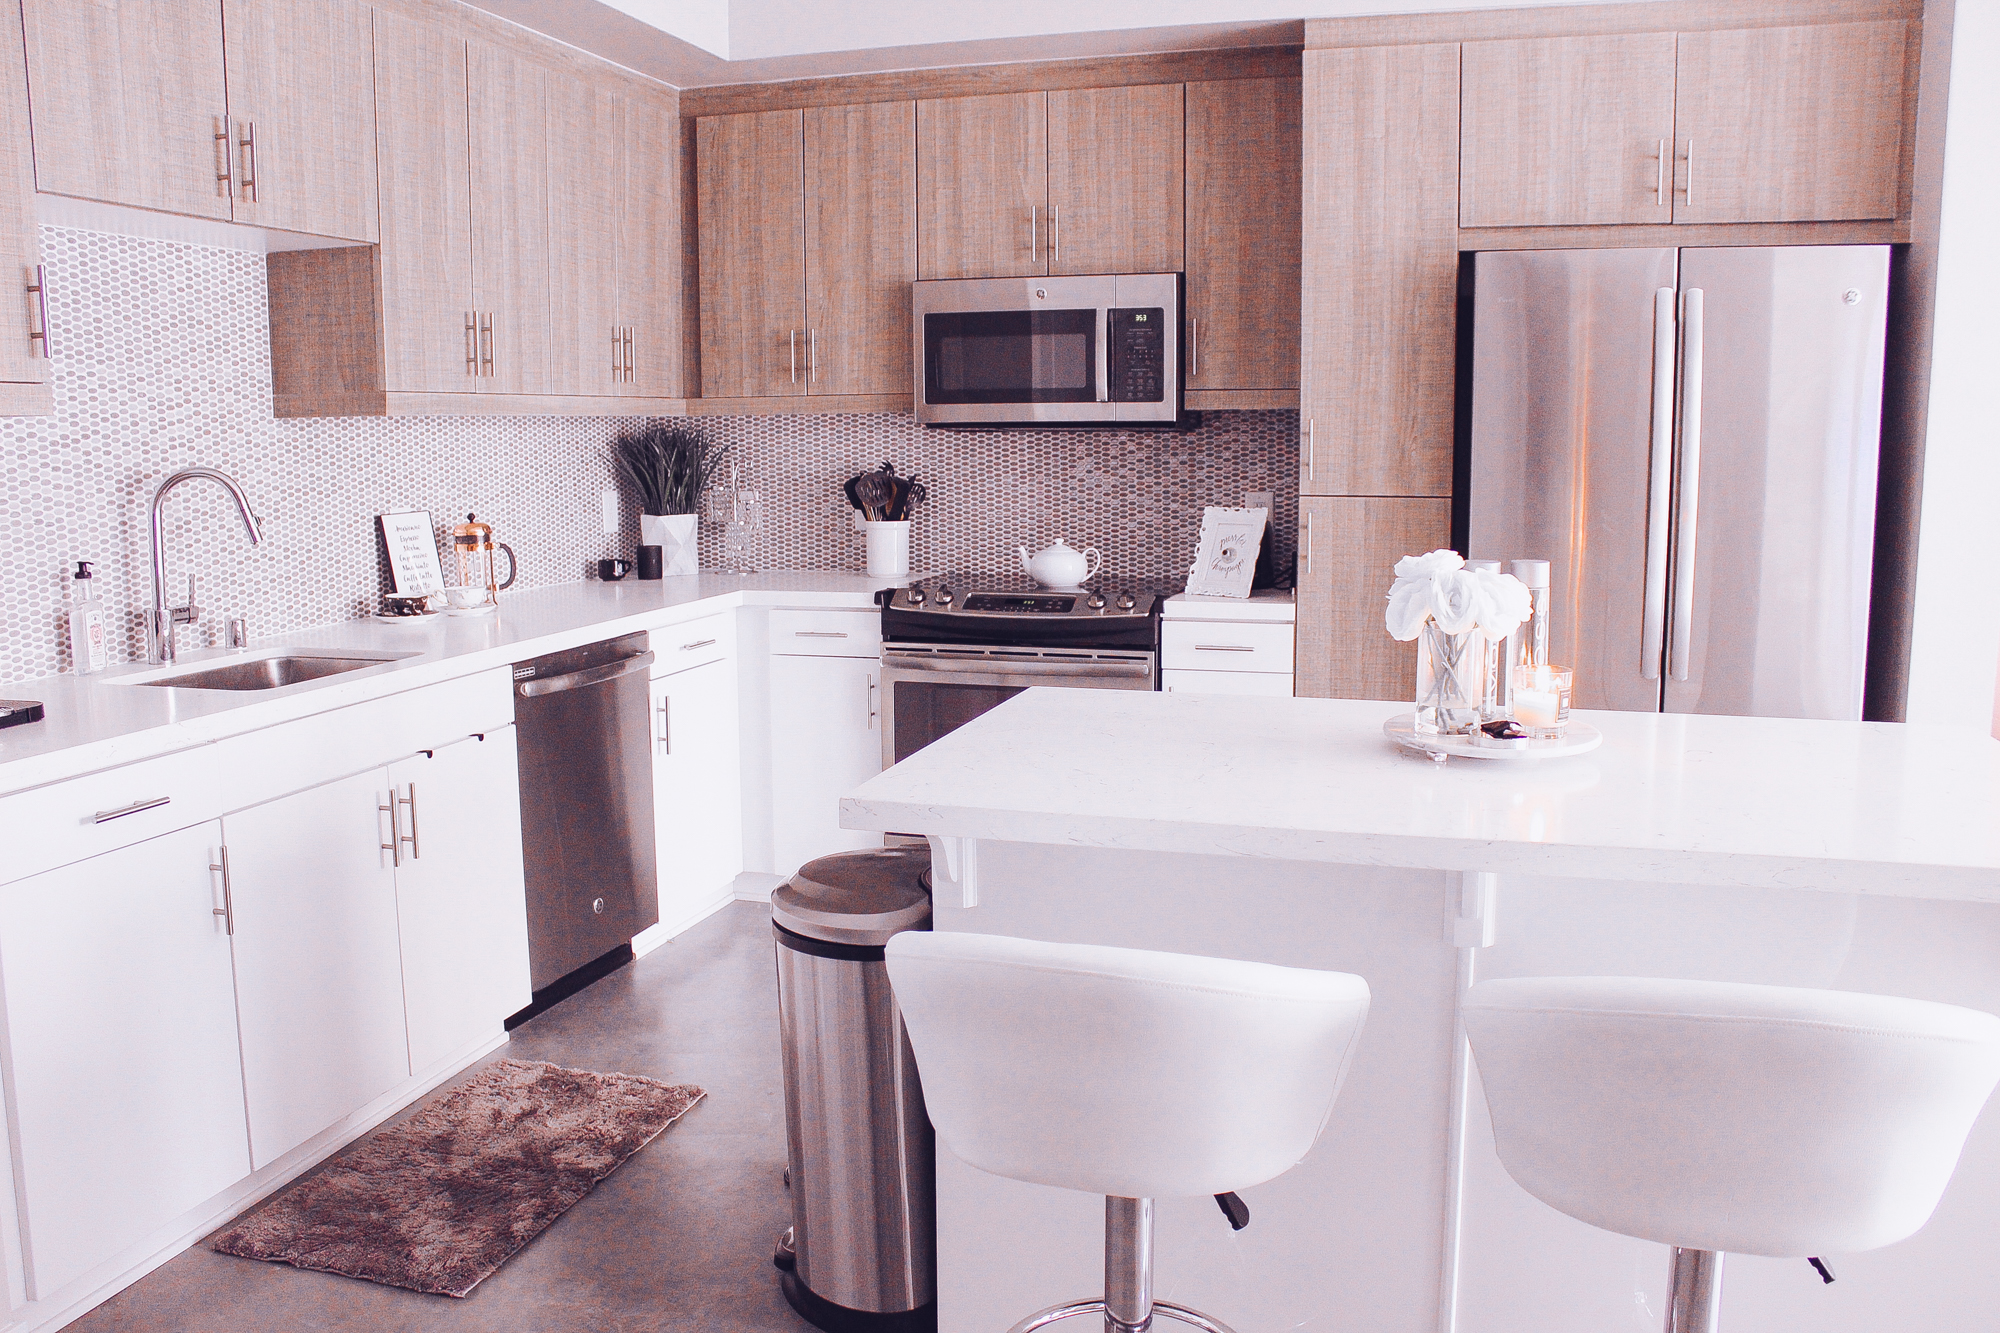 Blondie in the City | Minimal Home Decor | Kitchen Decor | White Marble Kitchen | Neutral Kitchen Decor | #Decor #Home